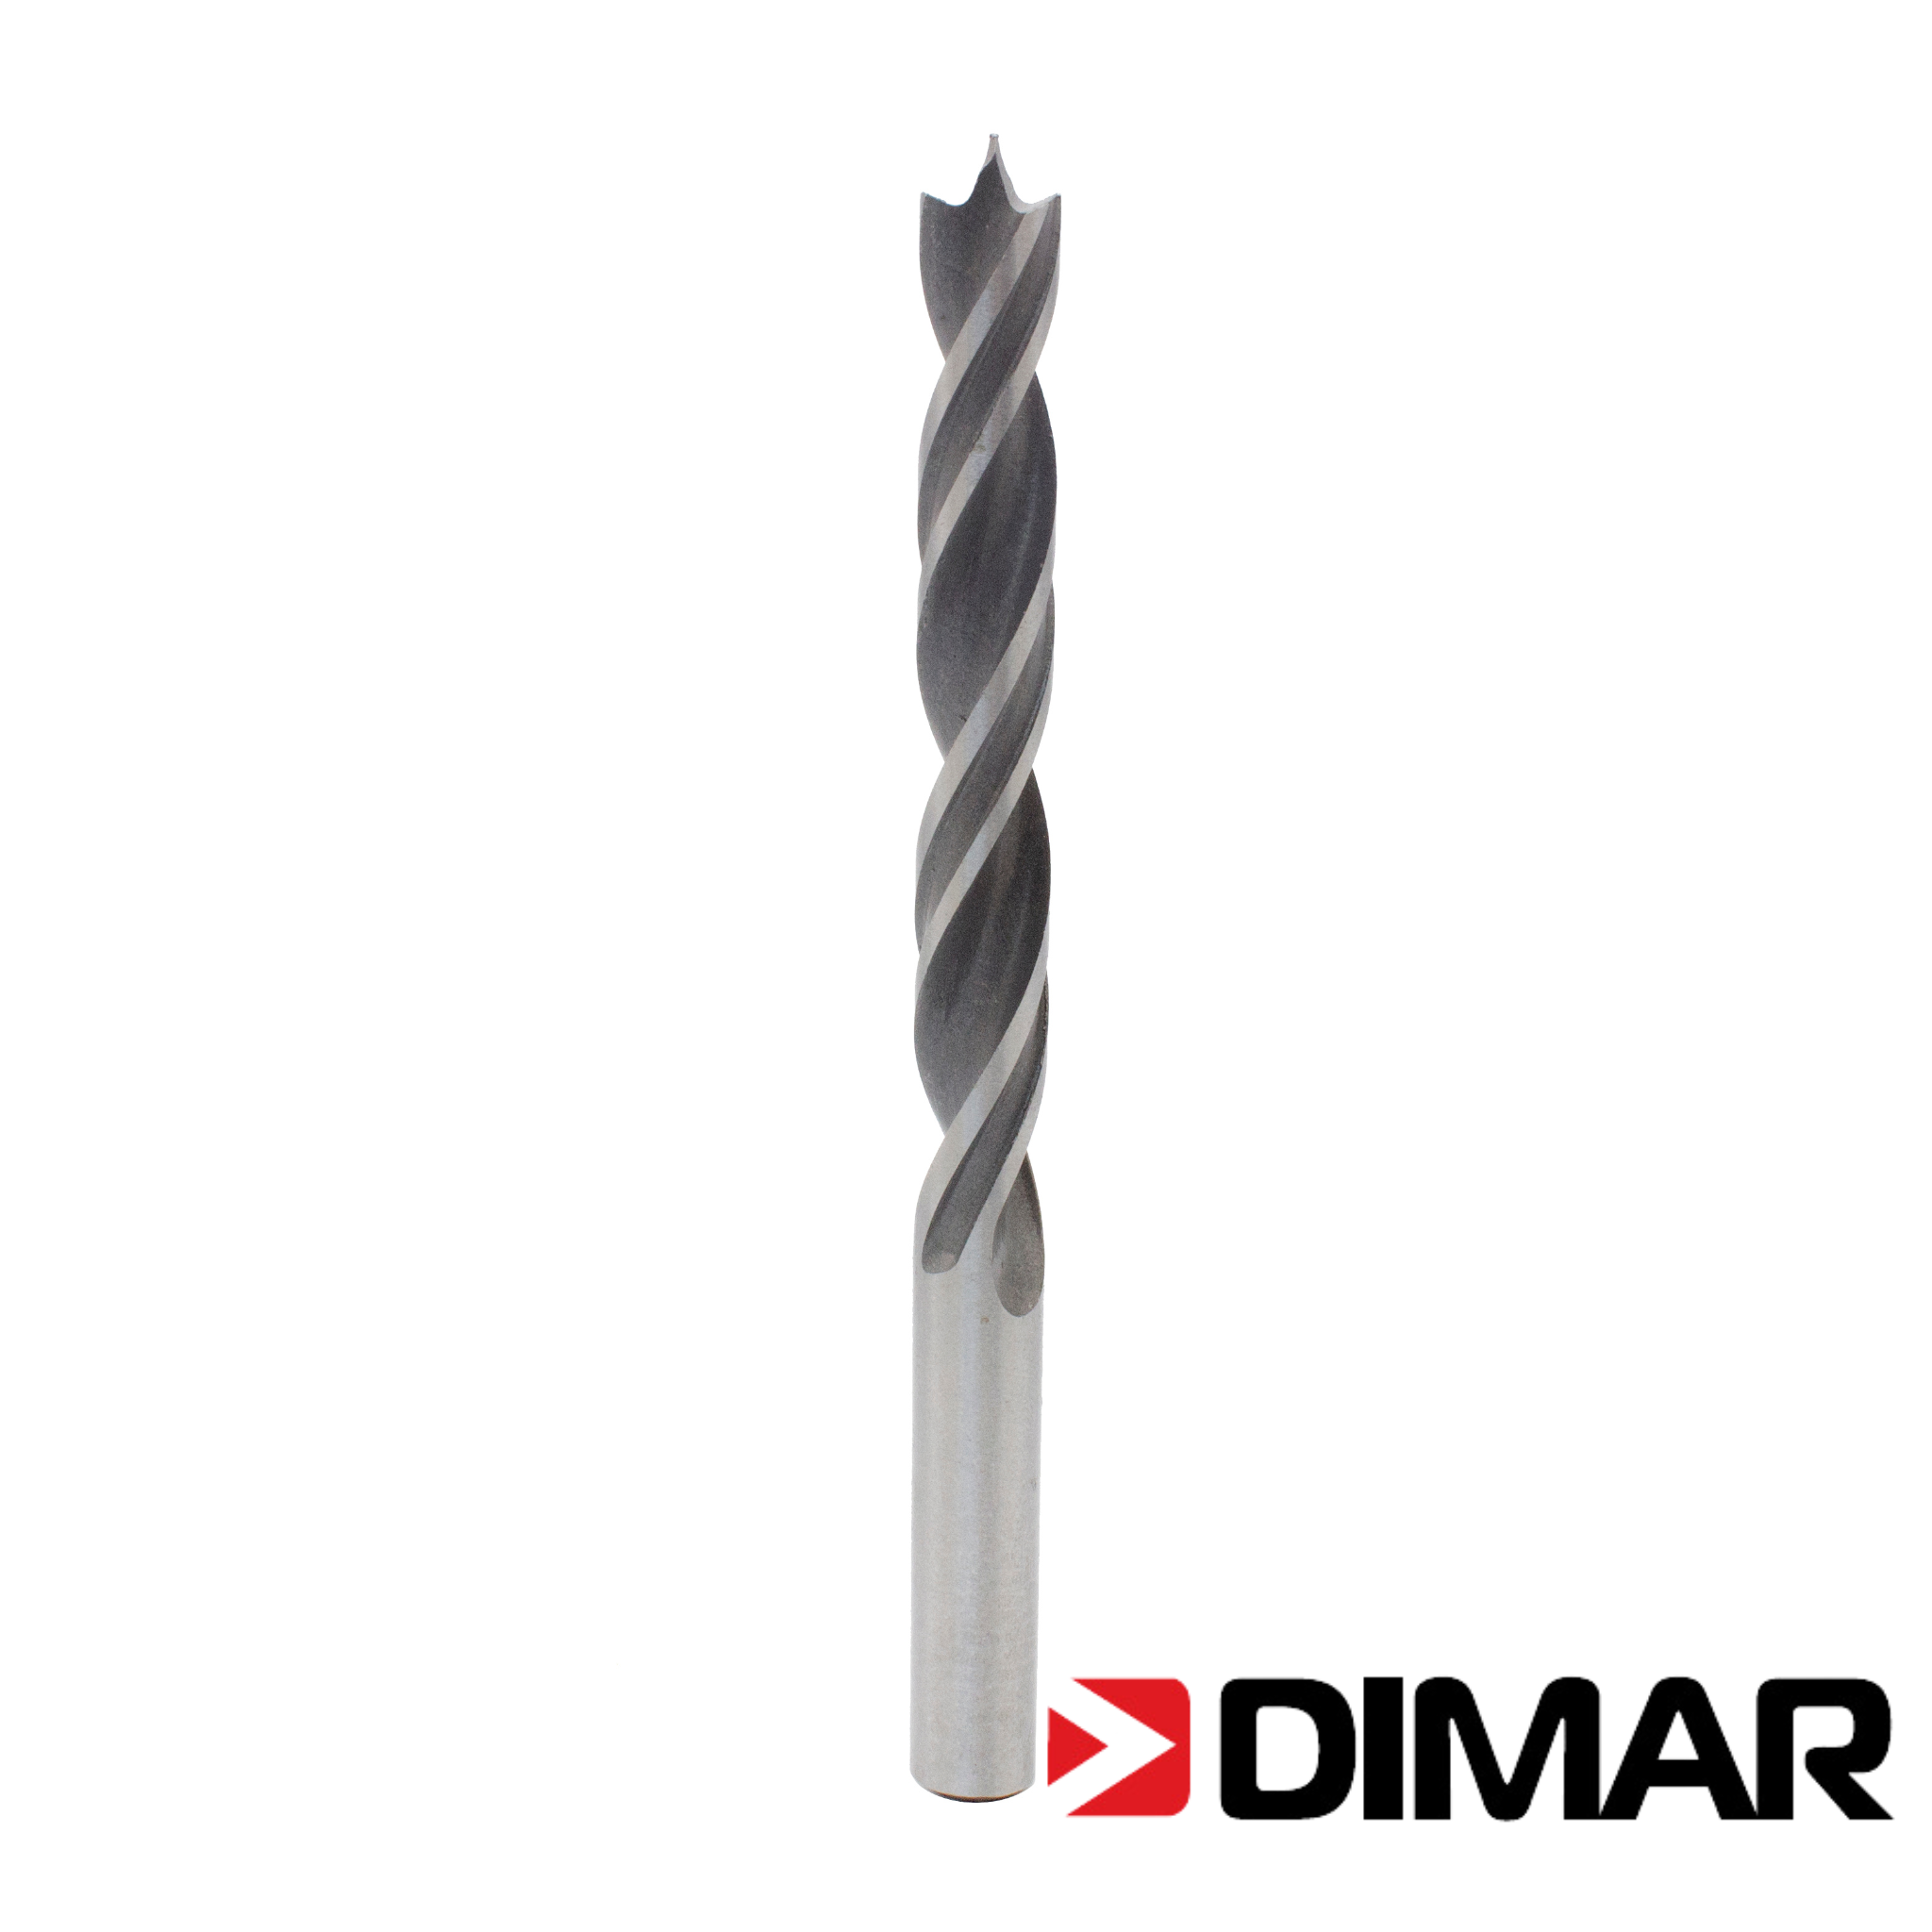 Dimar - Brad Point | Product